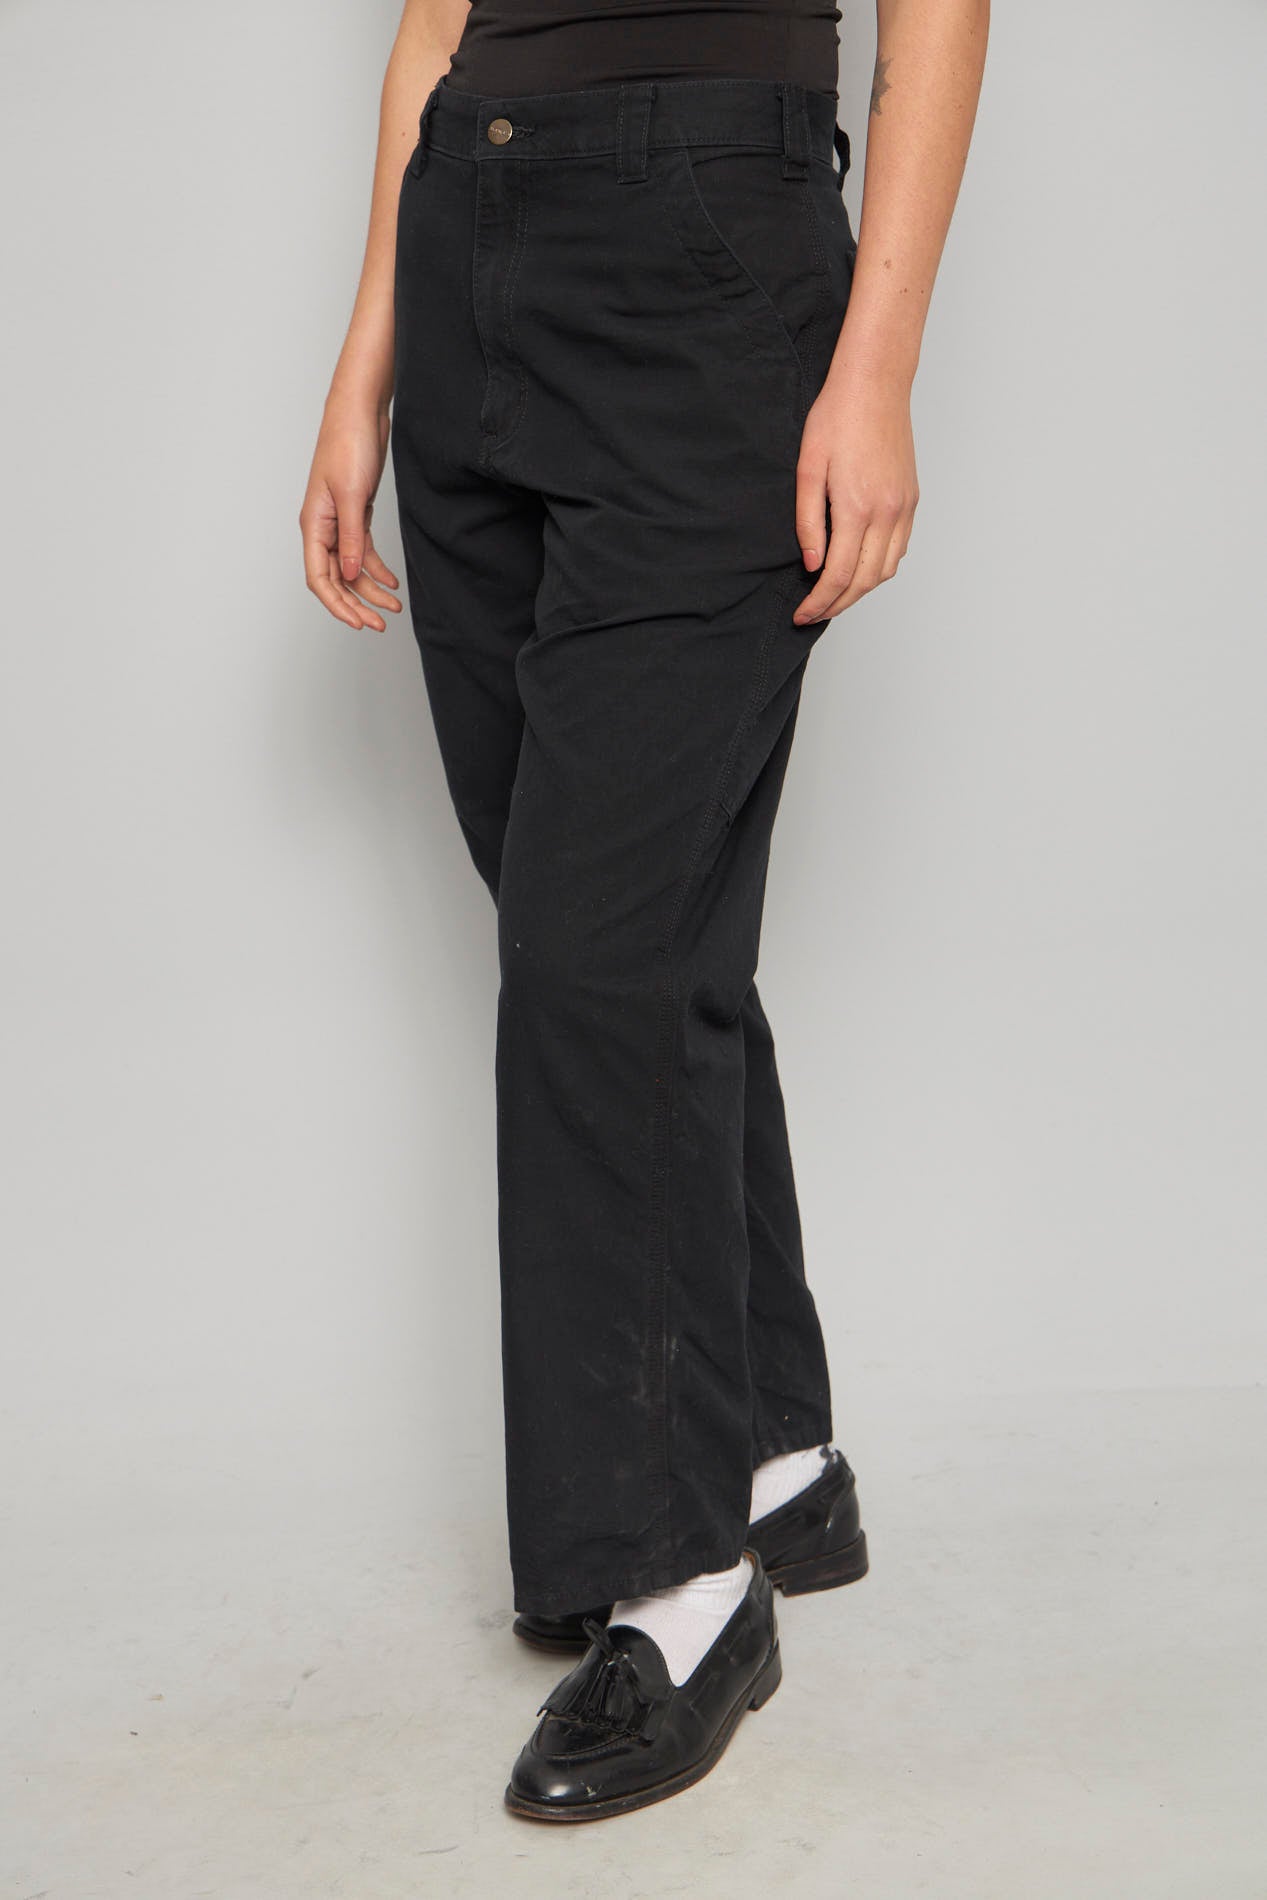 Pantalon casual  negro carhartt talla 40 991